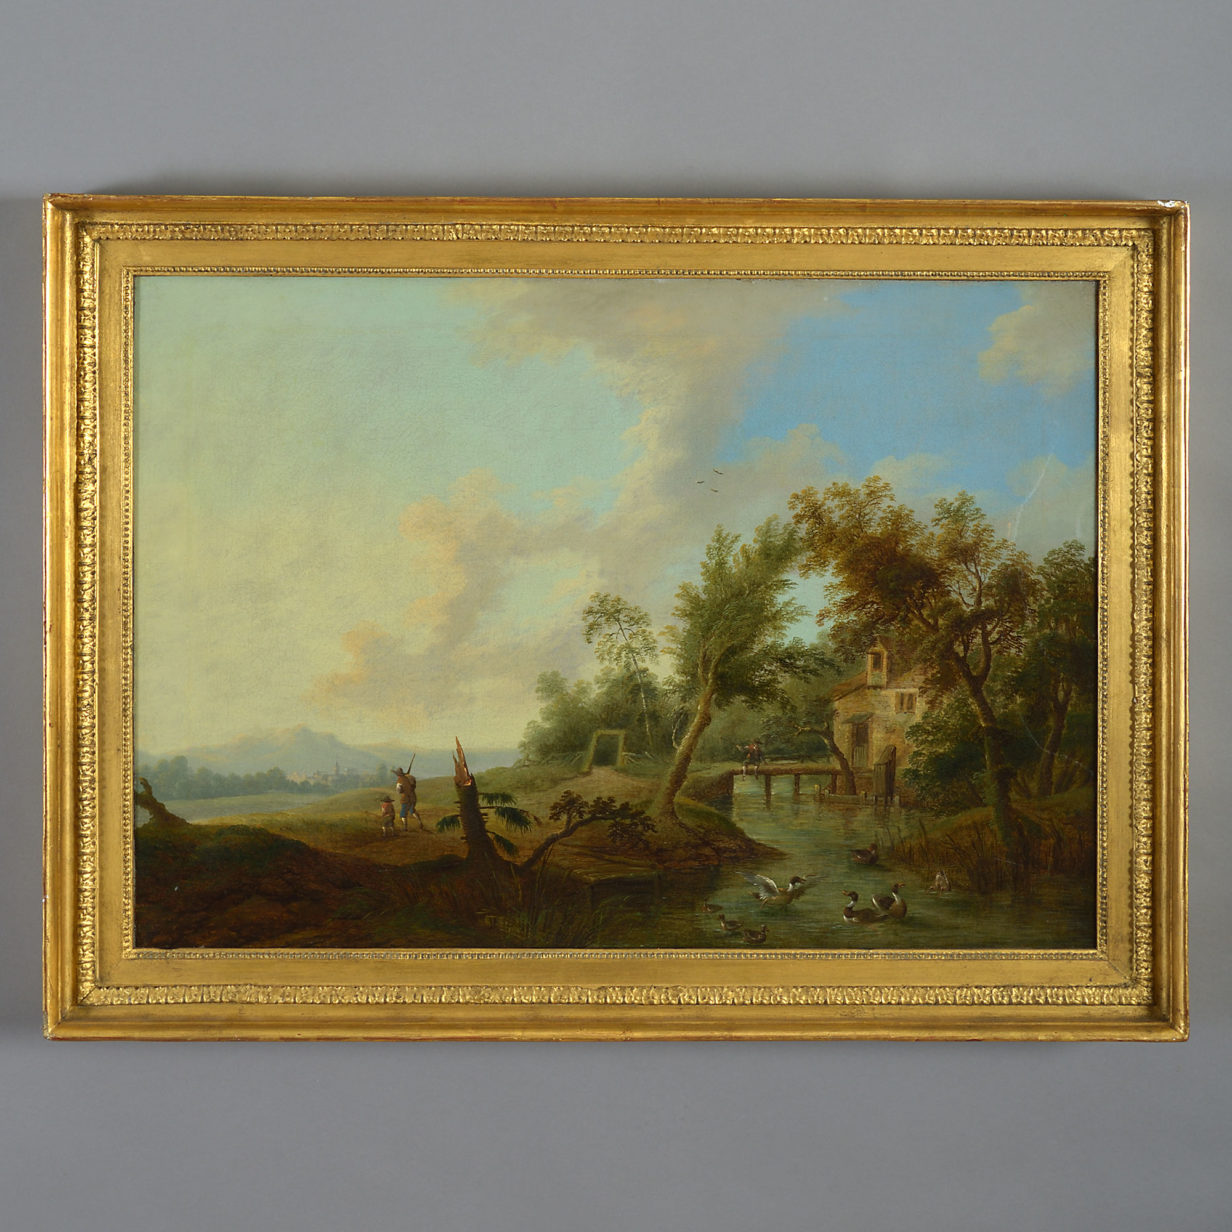 18th century pair of rhineland capriccio landscapes by franz schutz (1751 – 1781)